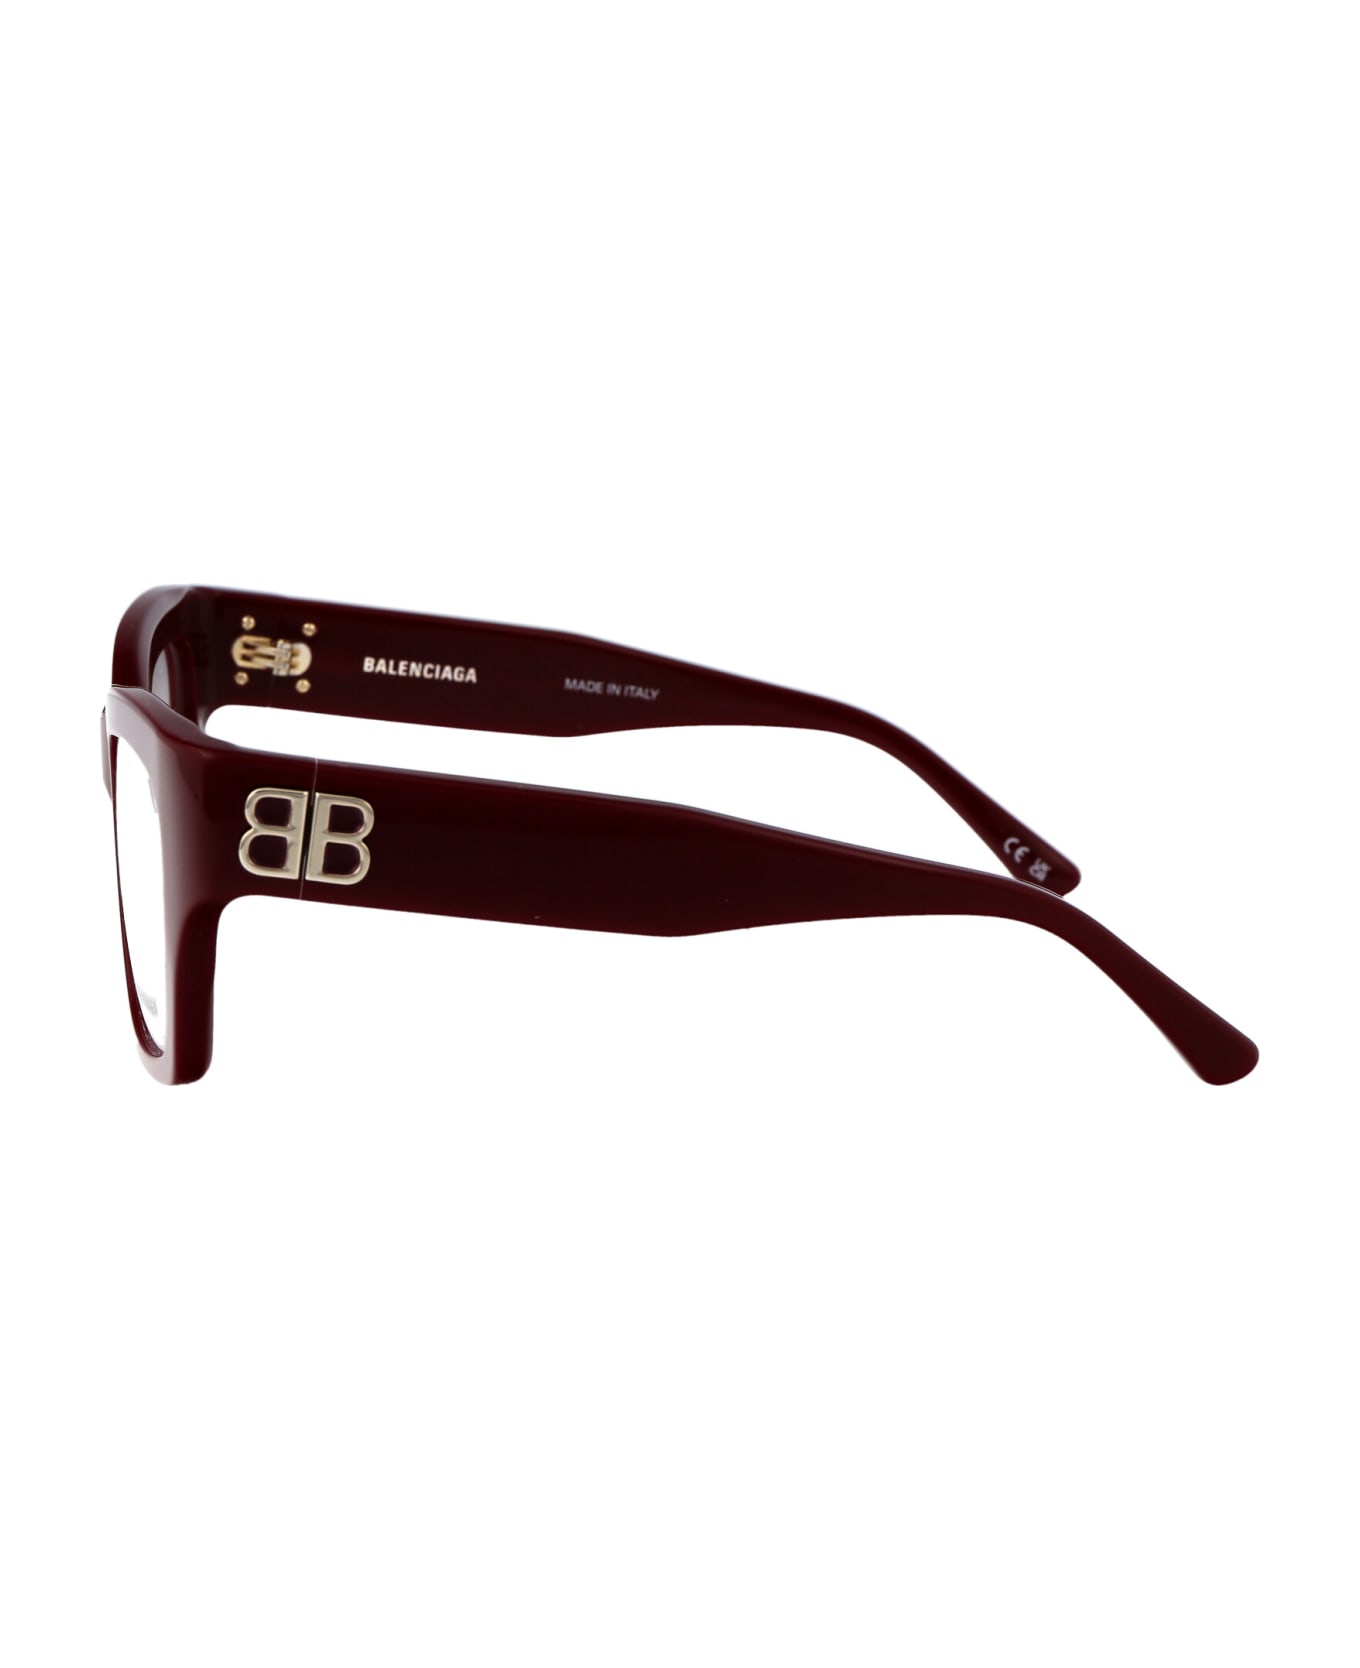 Balenciaga Eyewear Glasses - 009 BURGUNDY BURGUNDY TRANSPARENT